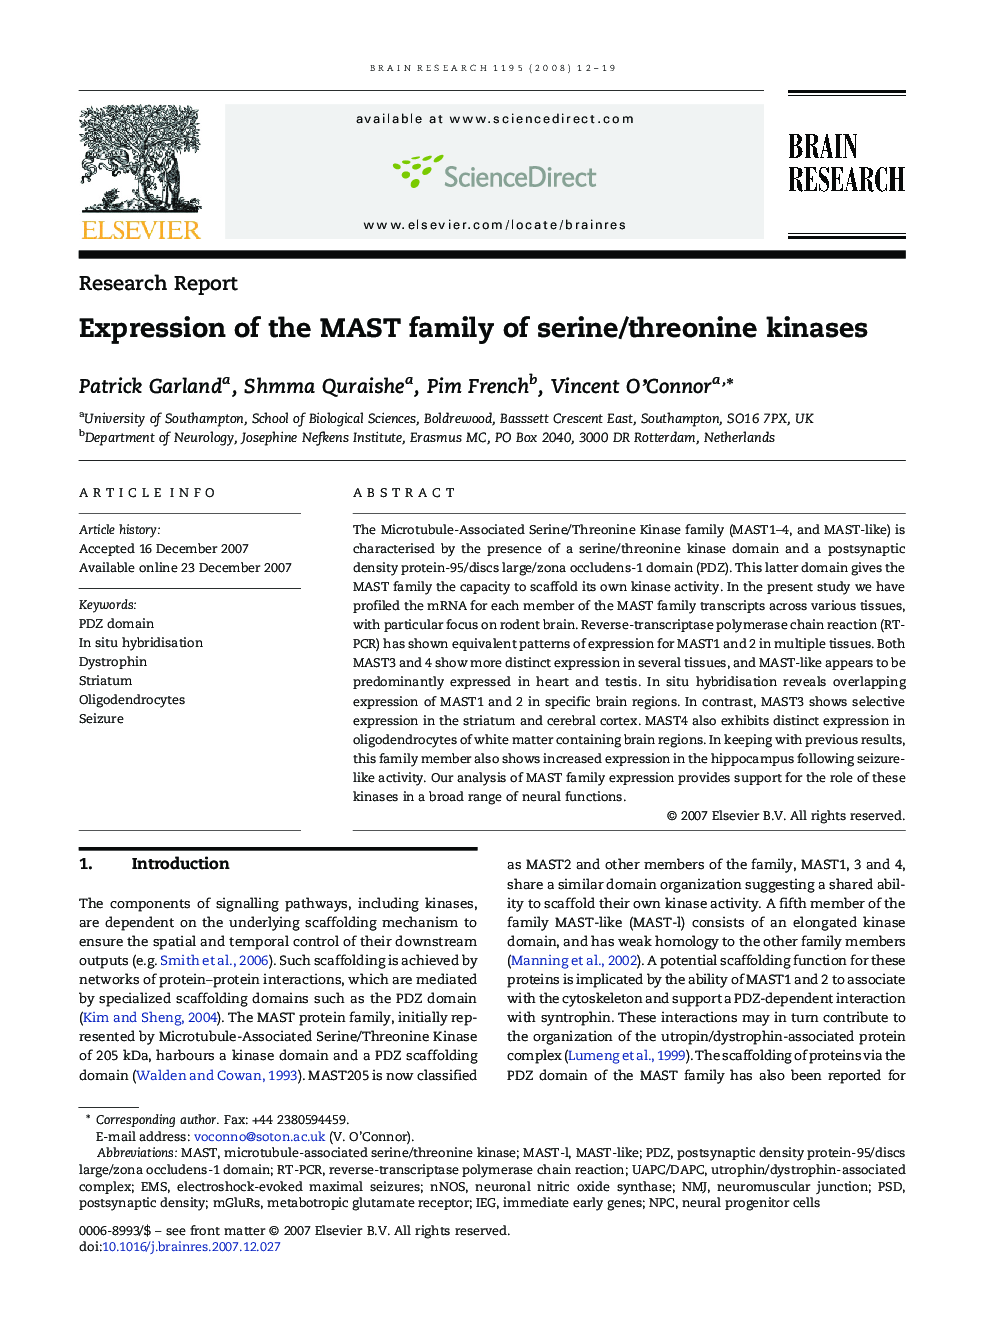 Expression of the MAST family of serine/threonine kinases